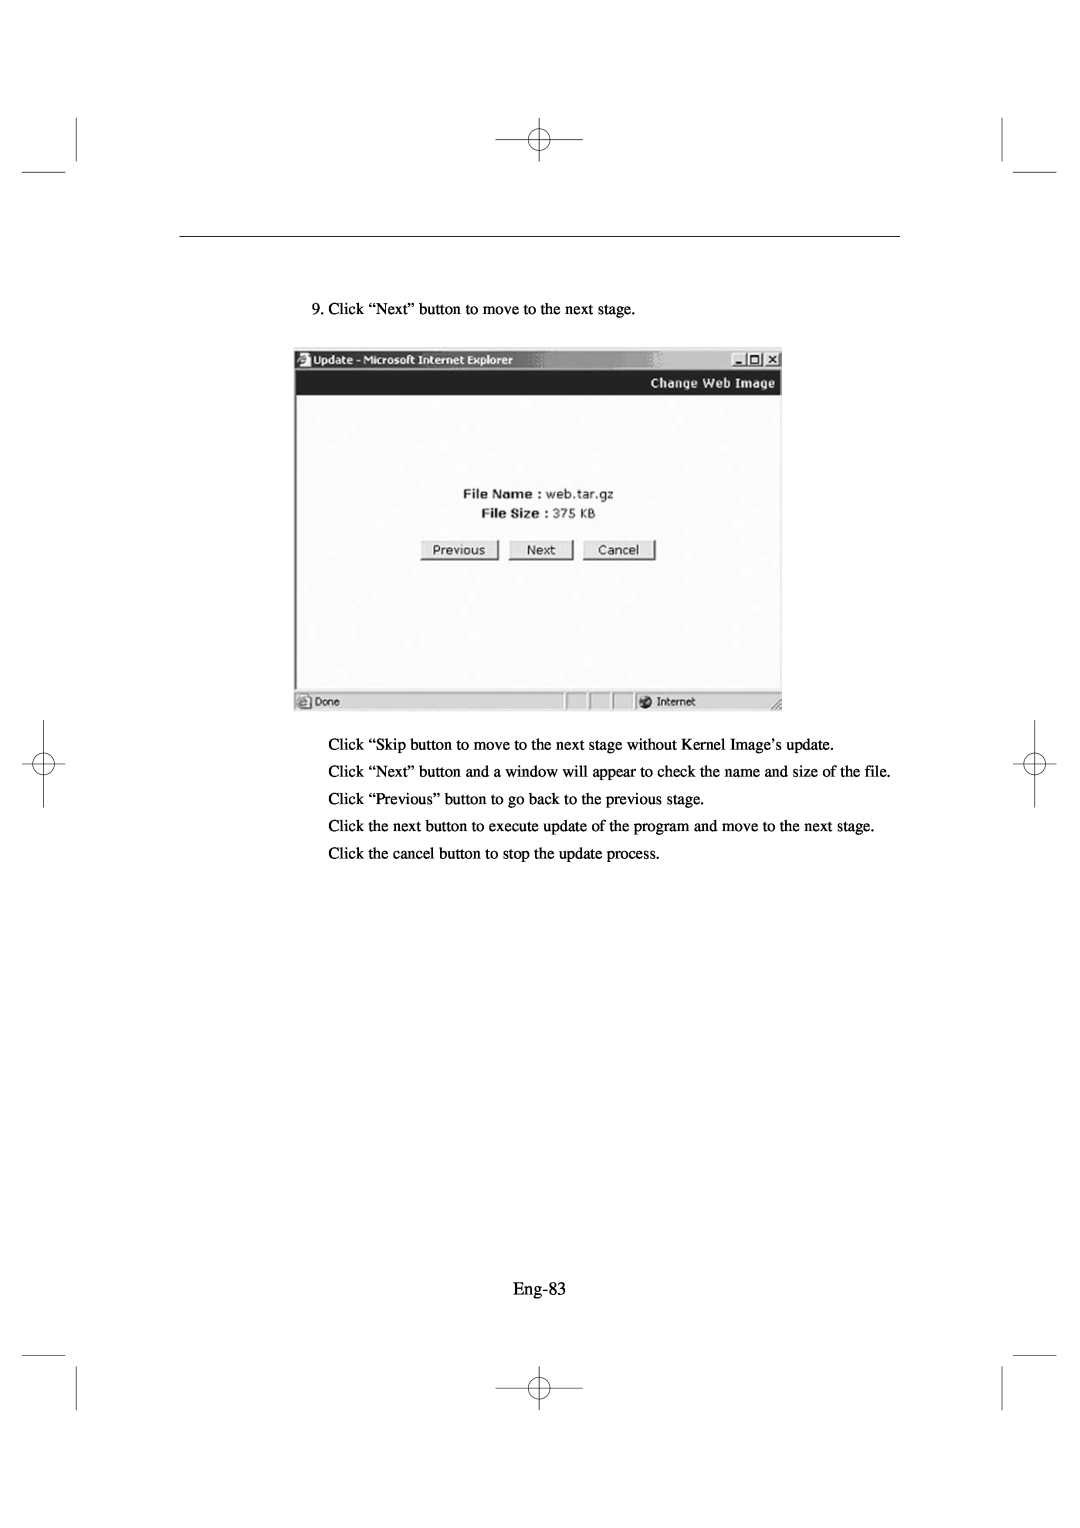 Samsung SSC17WEB manual Eng-83 